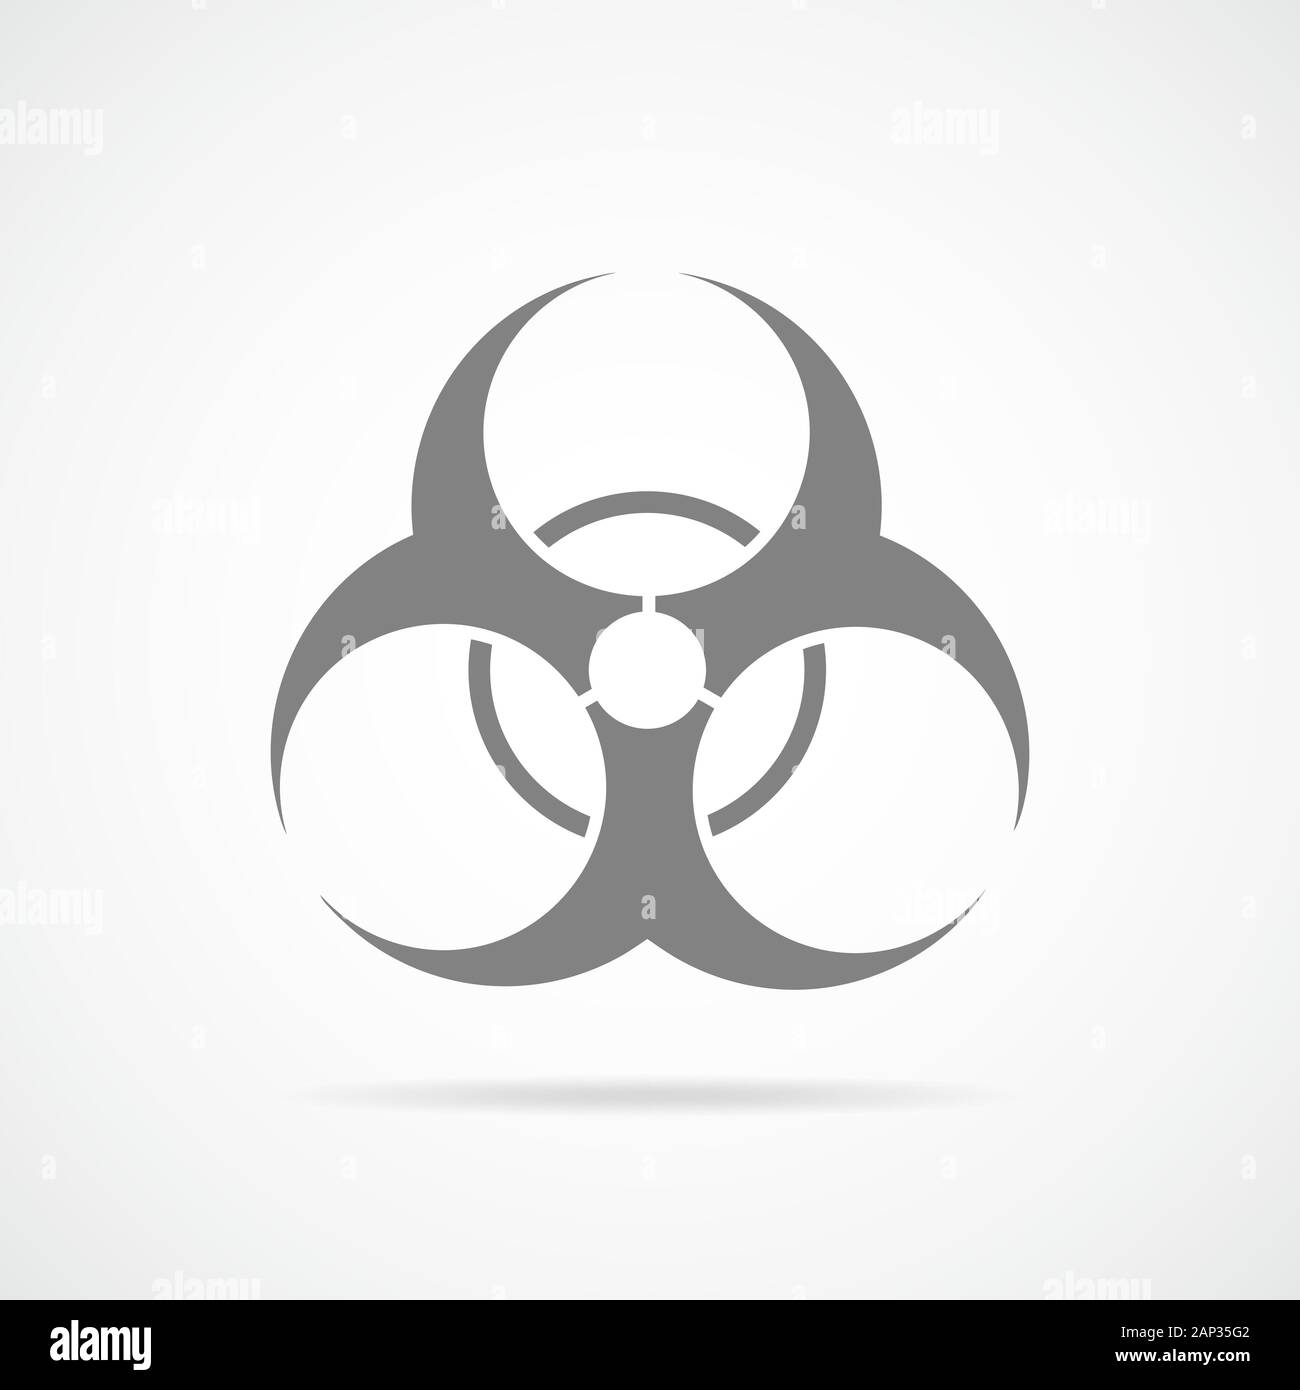 Biohazard icon in flat design. Vector illustration. Gray symbol of biohazard, isolated on white background. Stock Vector